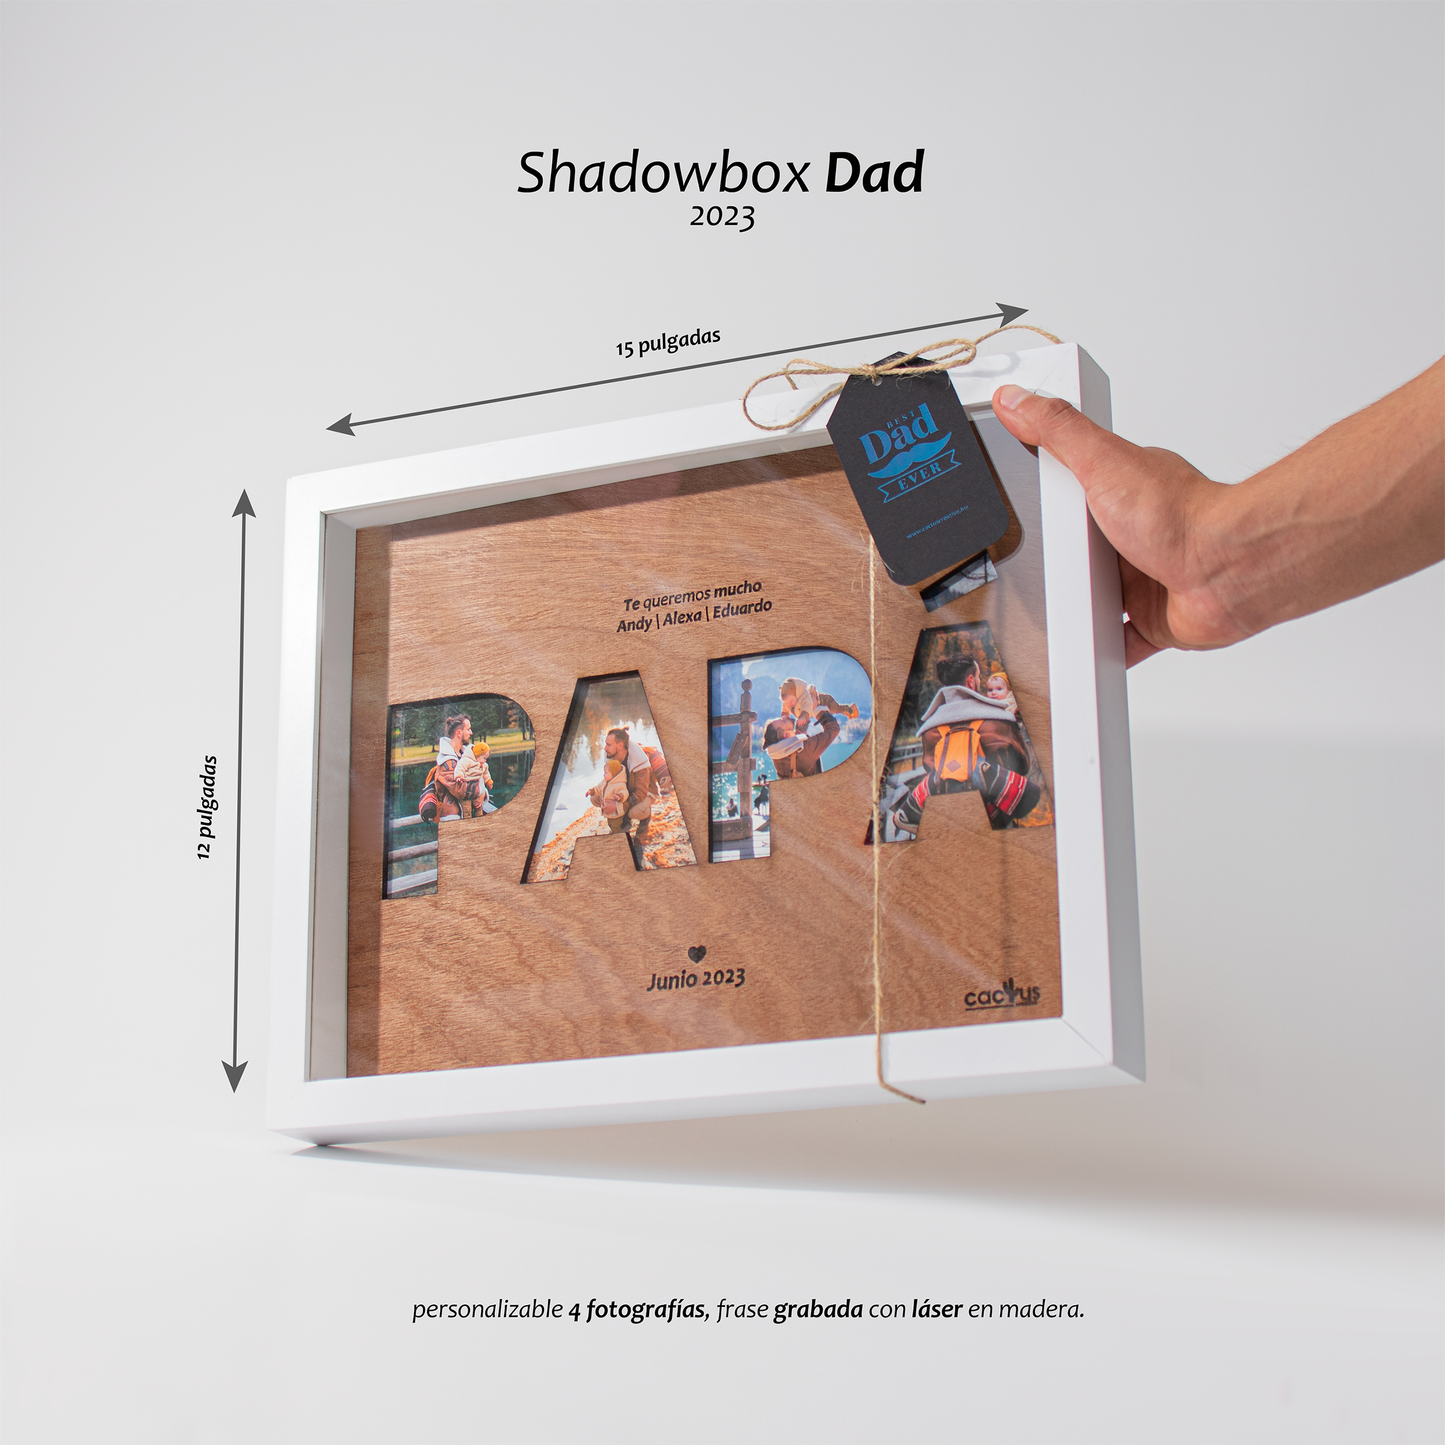 Shadowbox Dad 2023